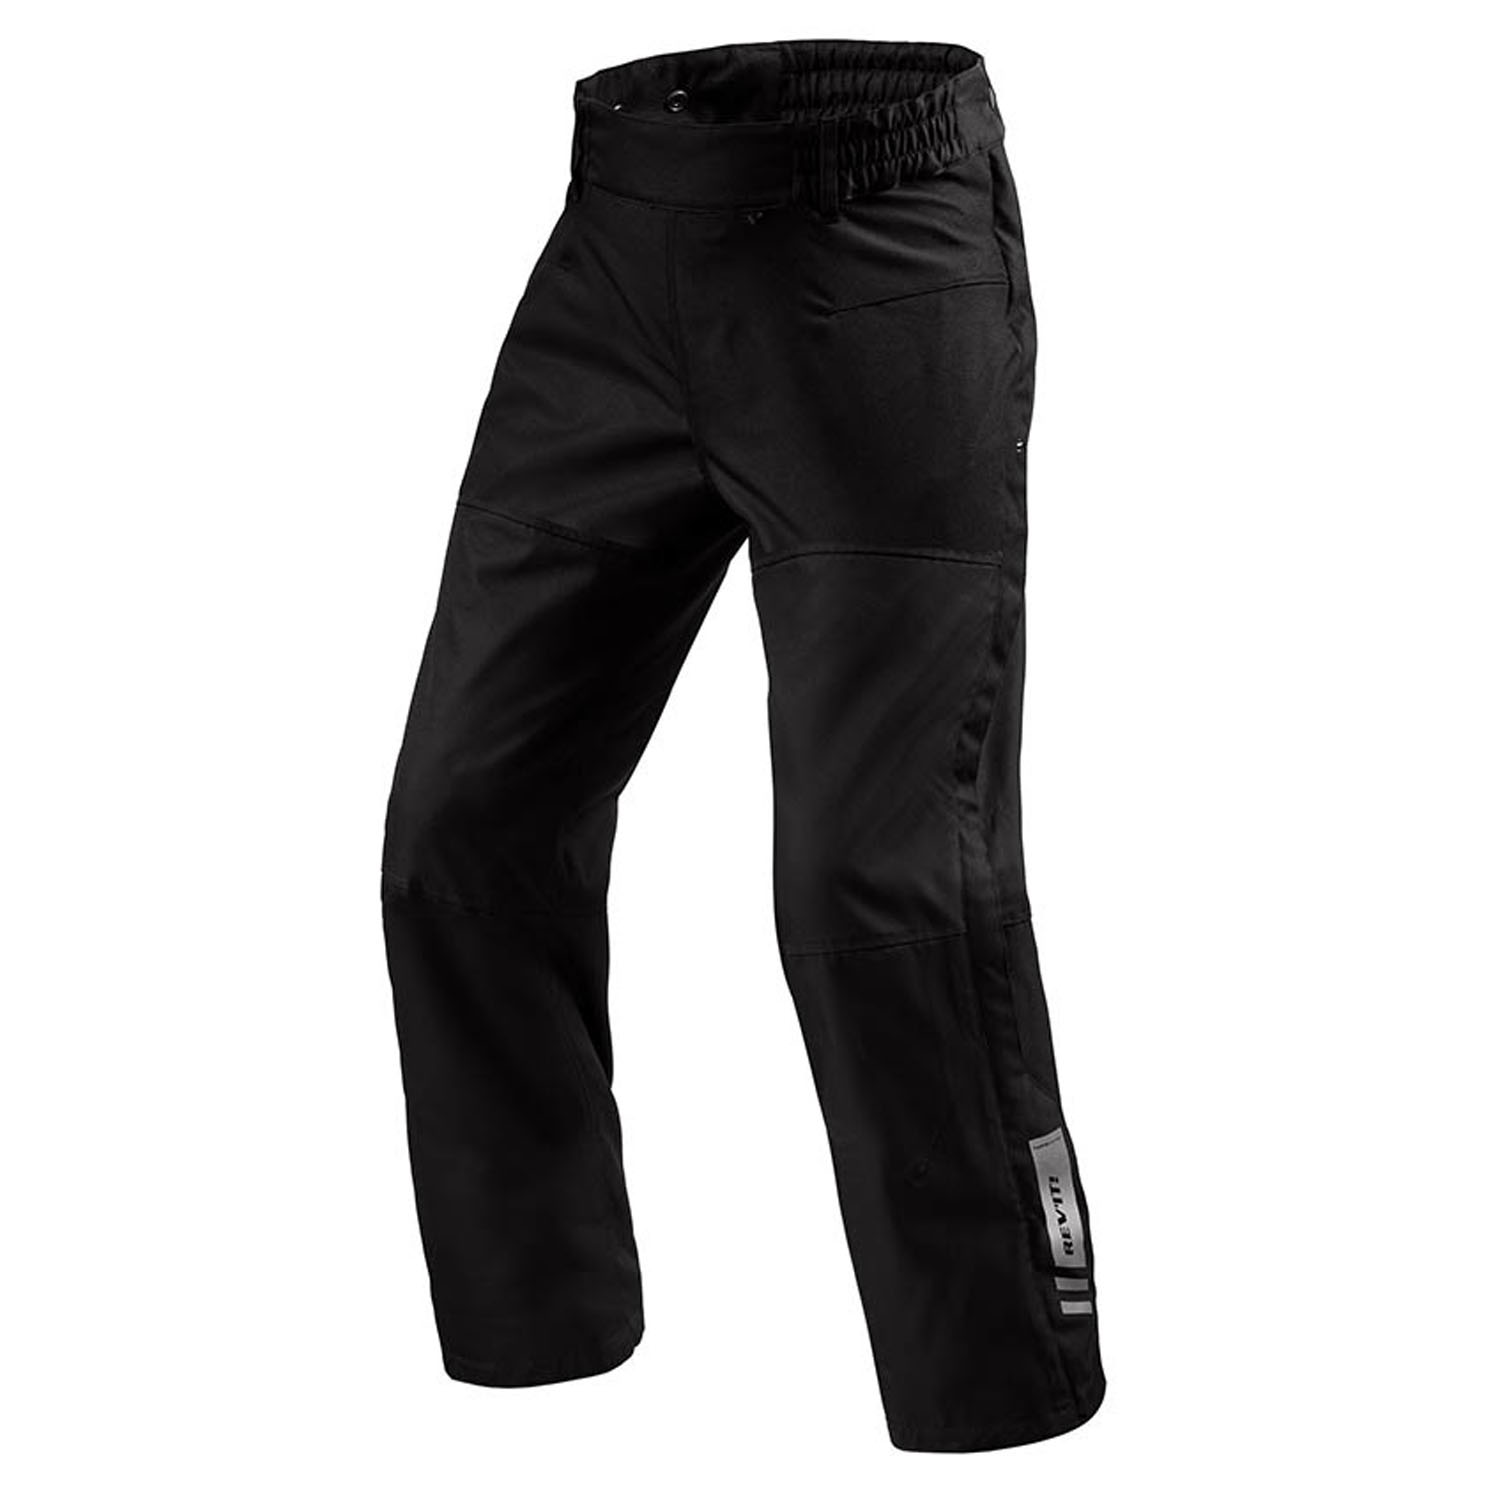 Image of REV'IT! Pants Axis 2 H2O Black Long Motorcycle Pants Talla M